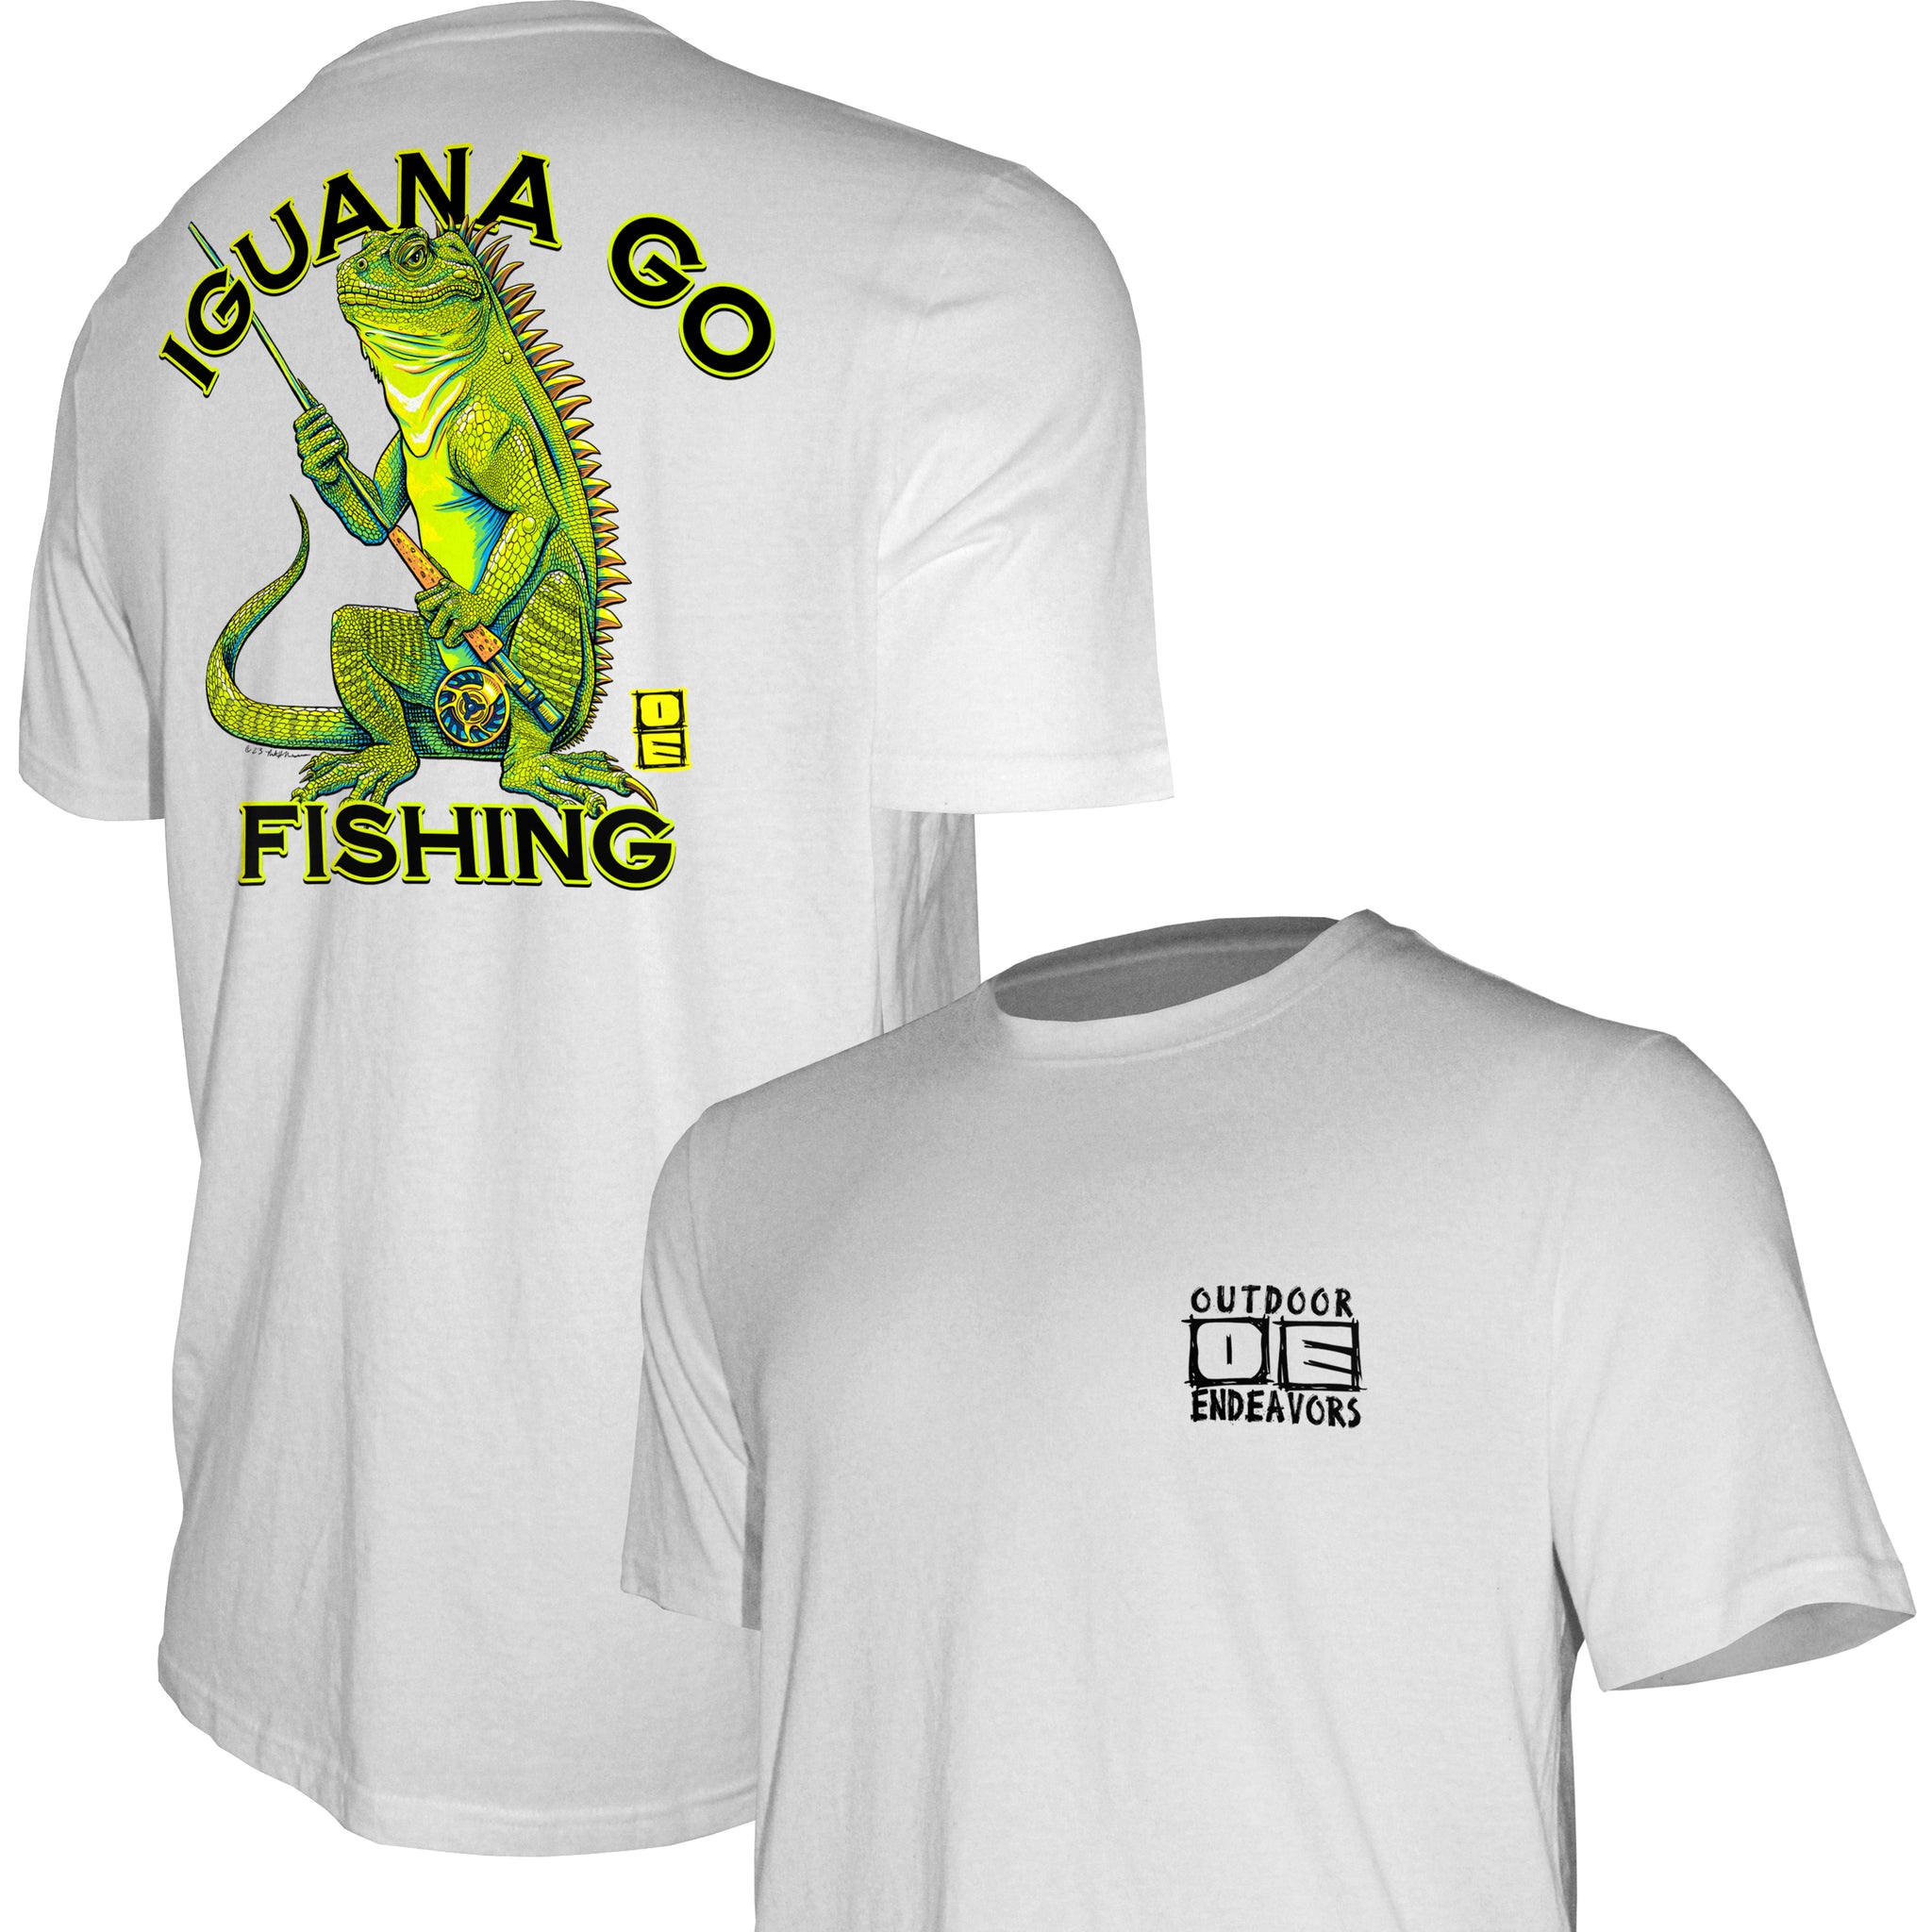 Outdoor Endeavors Attitude- American Made Tee - Iguana Go Fishing Medium / White